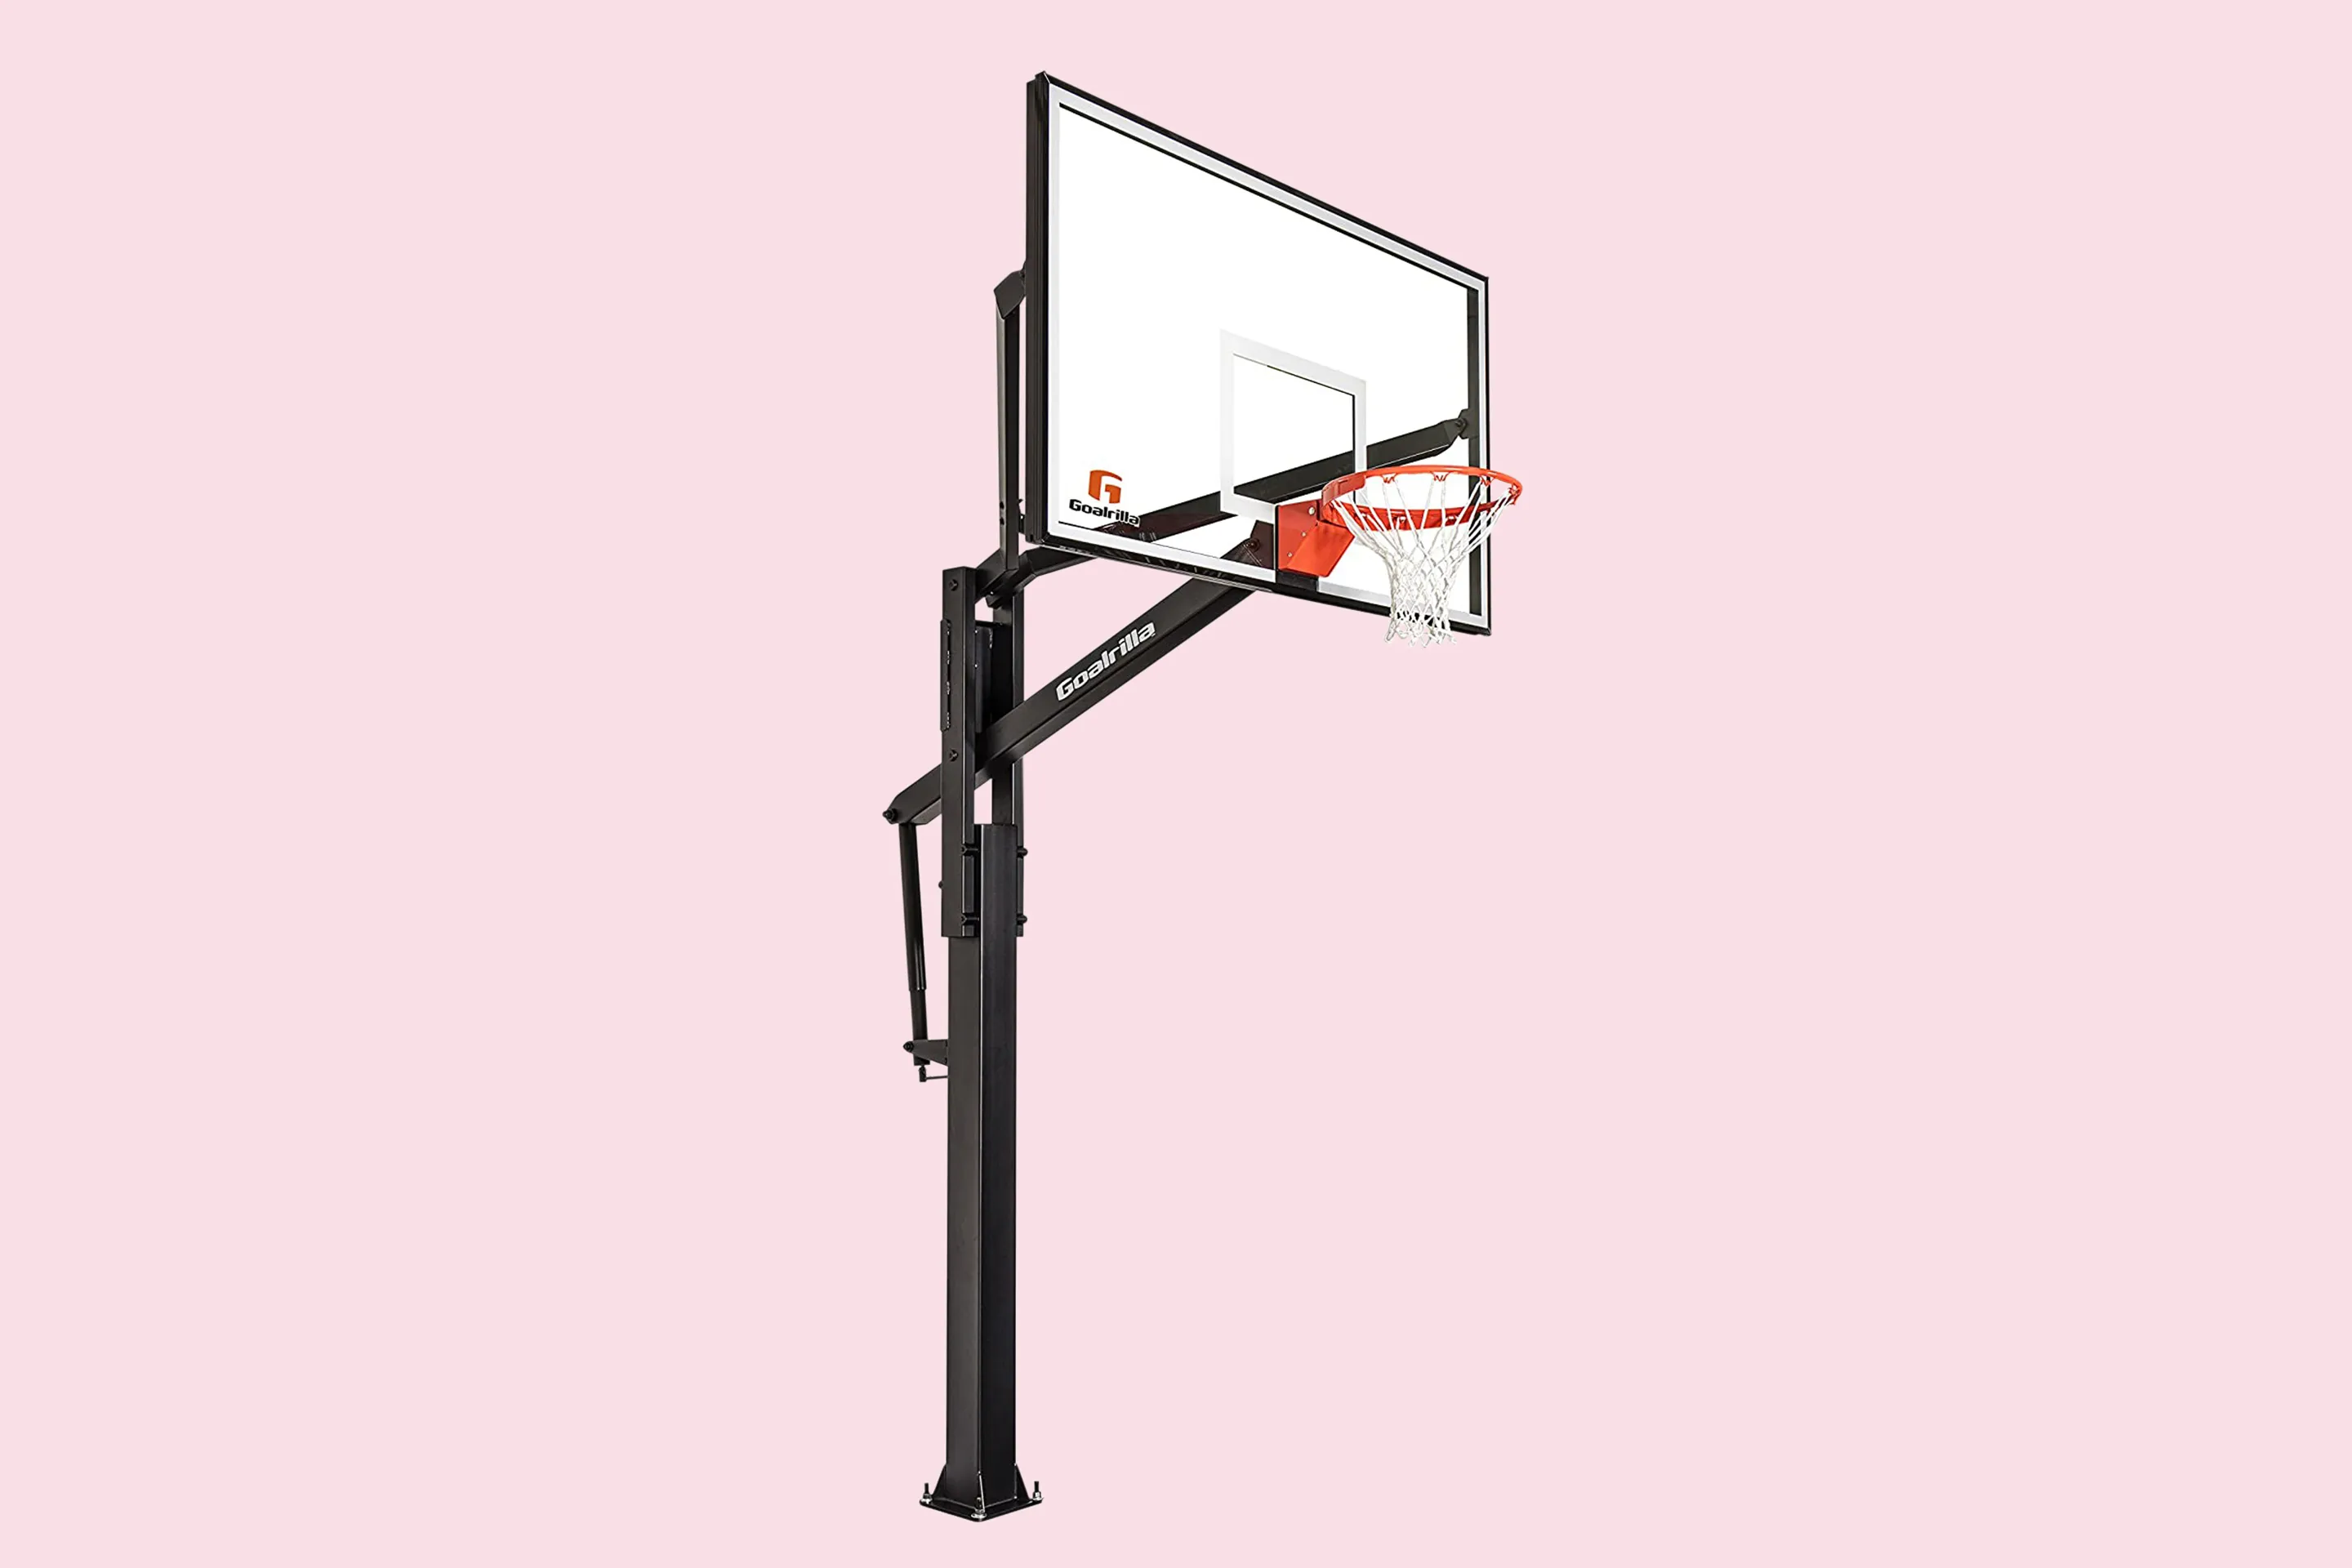 https://img.money.com/2021/05/Shopping-Goalrilla-FT-Series-Basketball-Hoops-with-Tempered-Glass-Backboard.jpg